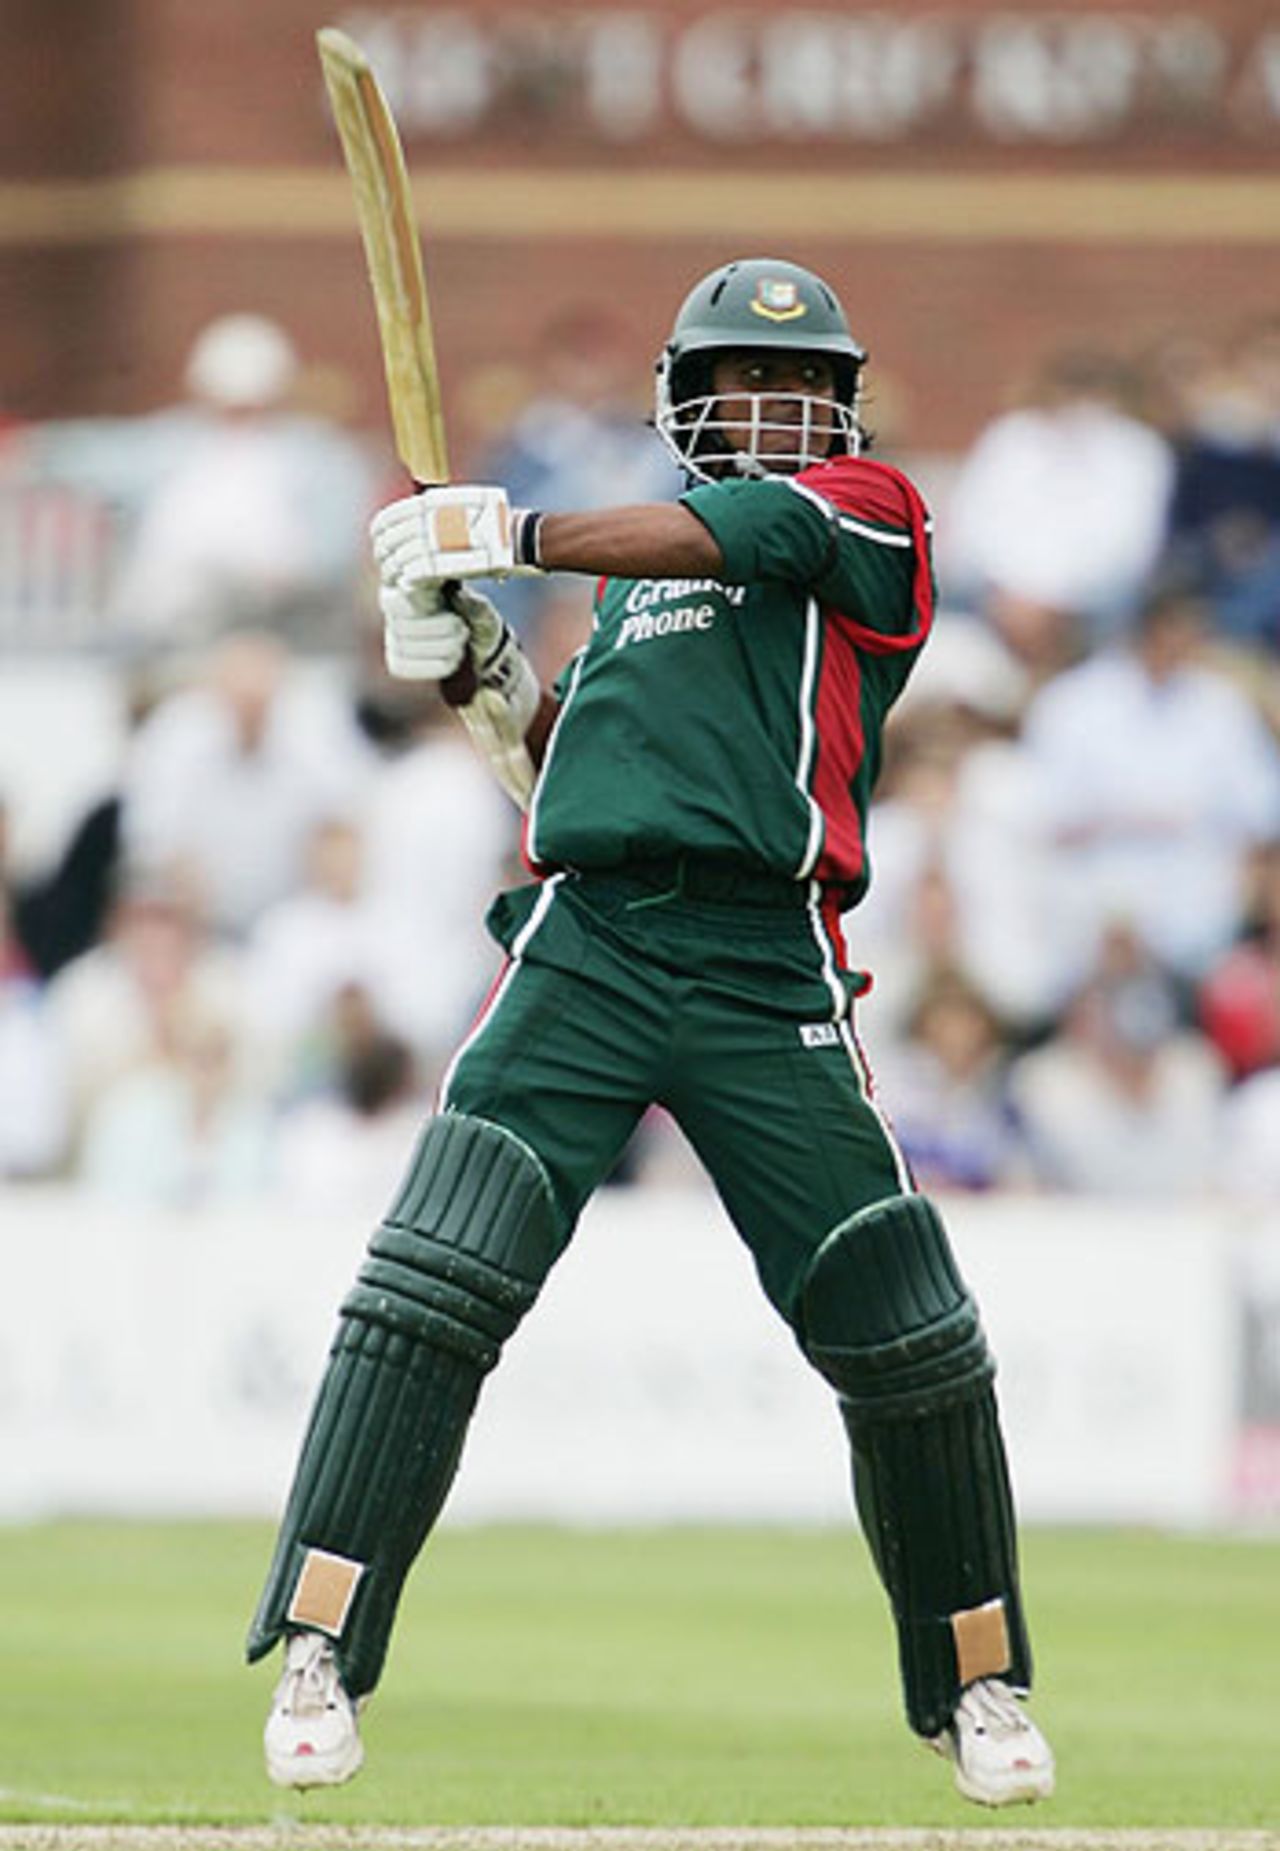 Shahriar Nafees adds to his career-best 75, Bangladesh v Australia, NatWest Series, June 30, 2005